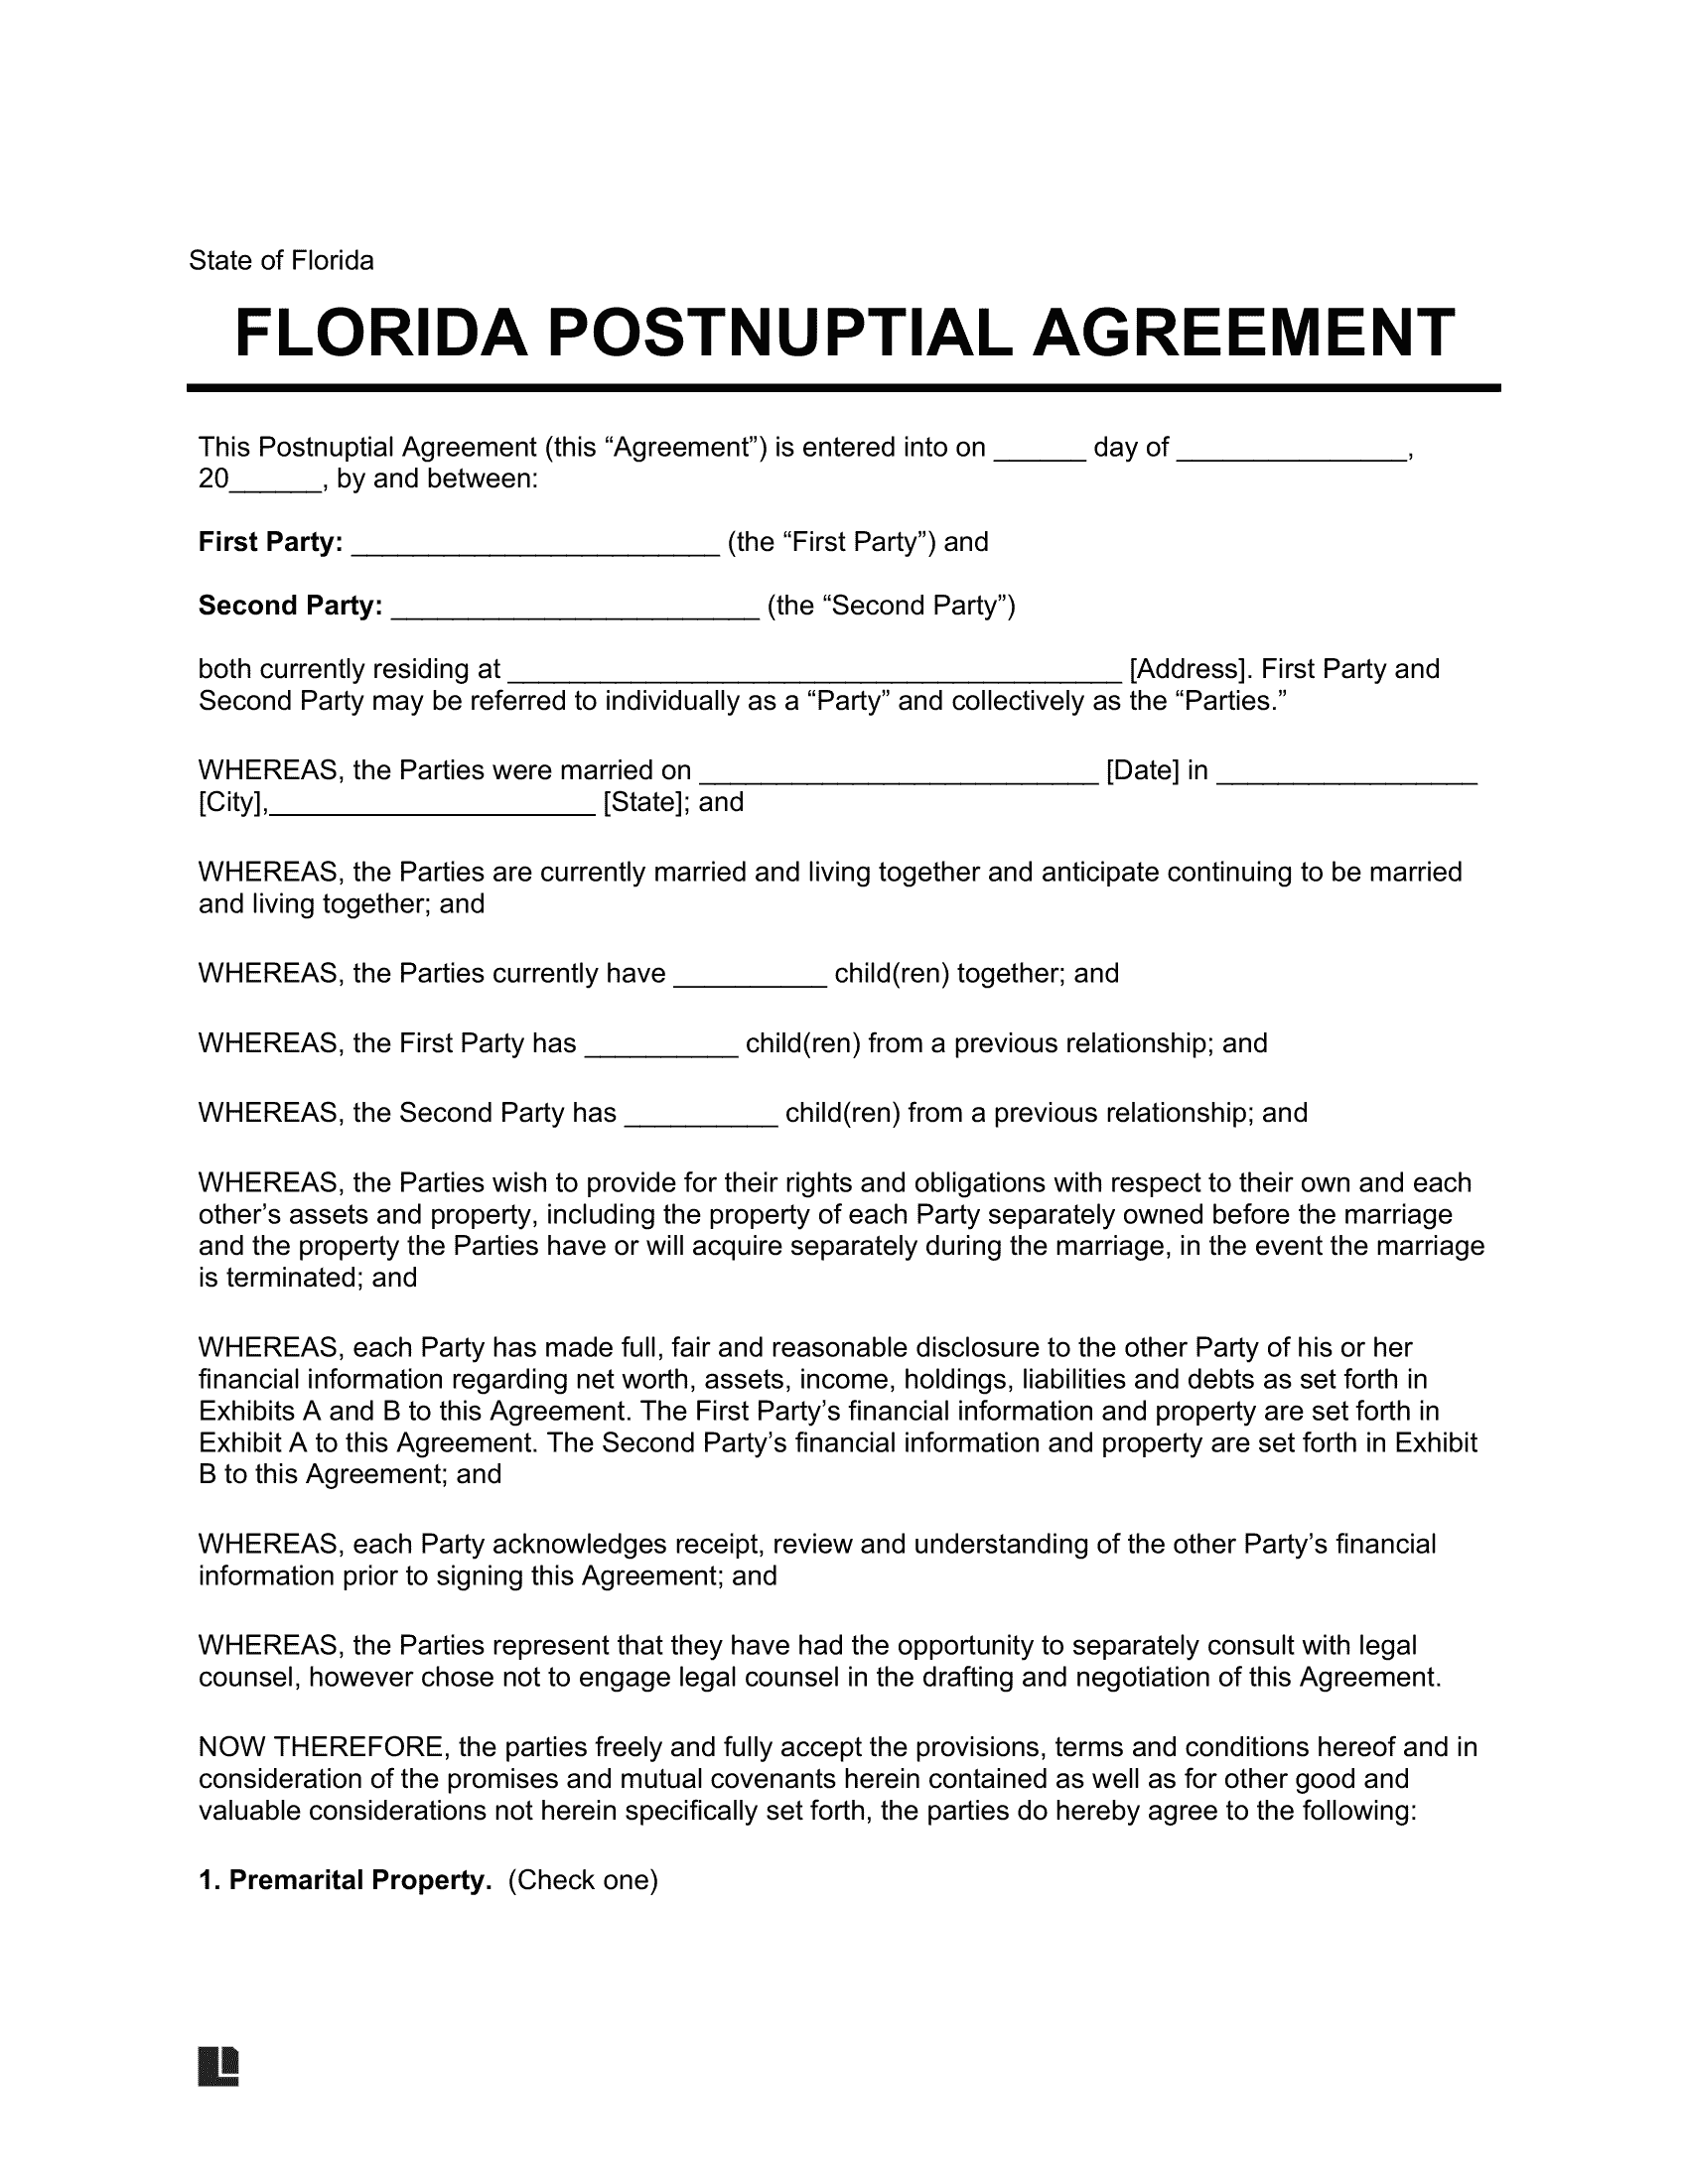 Florida Postnuptial Agreement Template